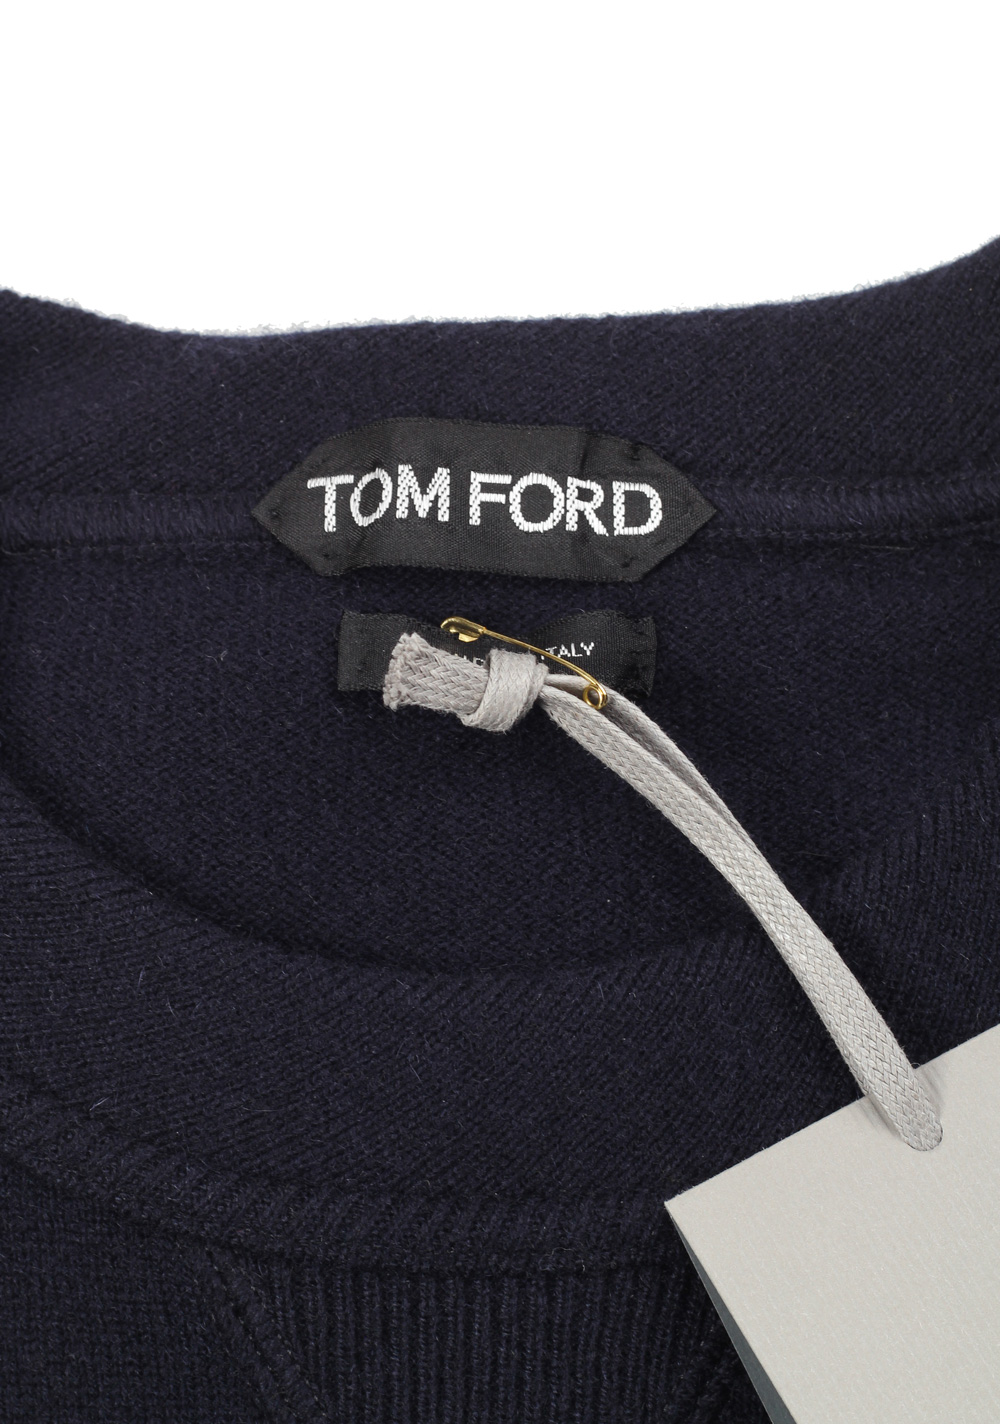 TOM FORD Cashmere Crew Neck Sweater Size 48 / 38R U.S. | Costume Limité